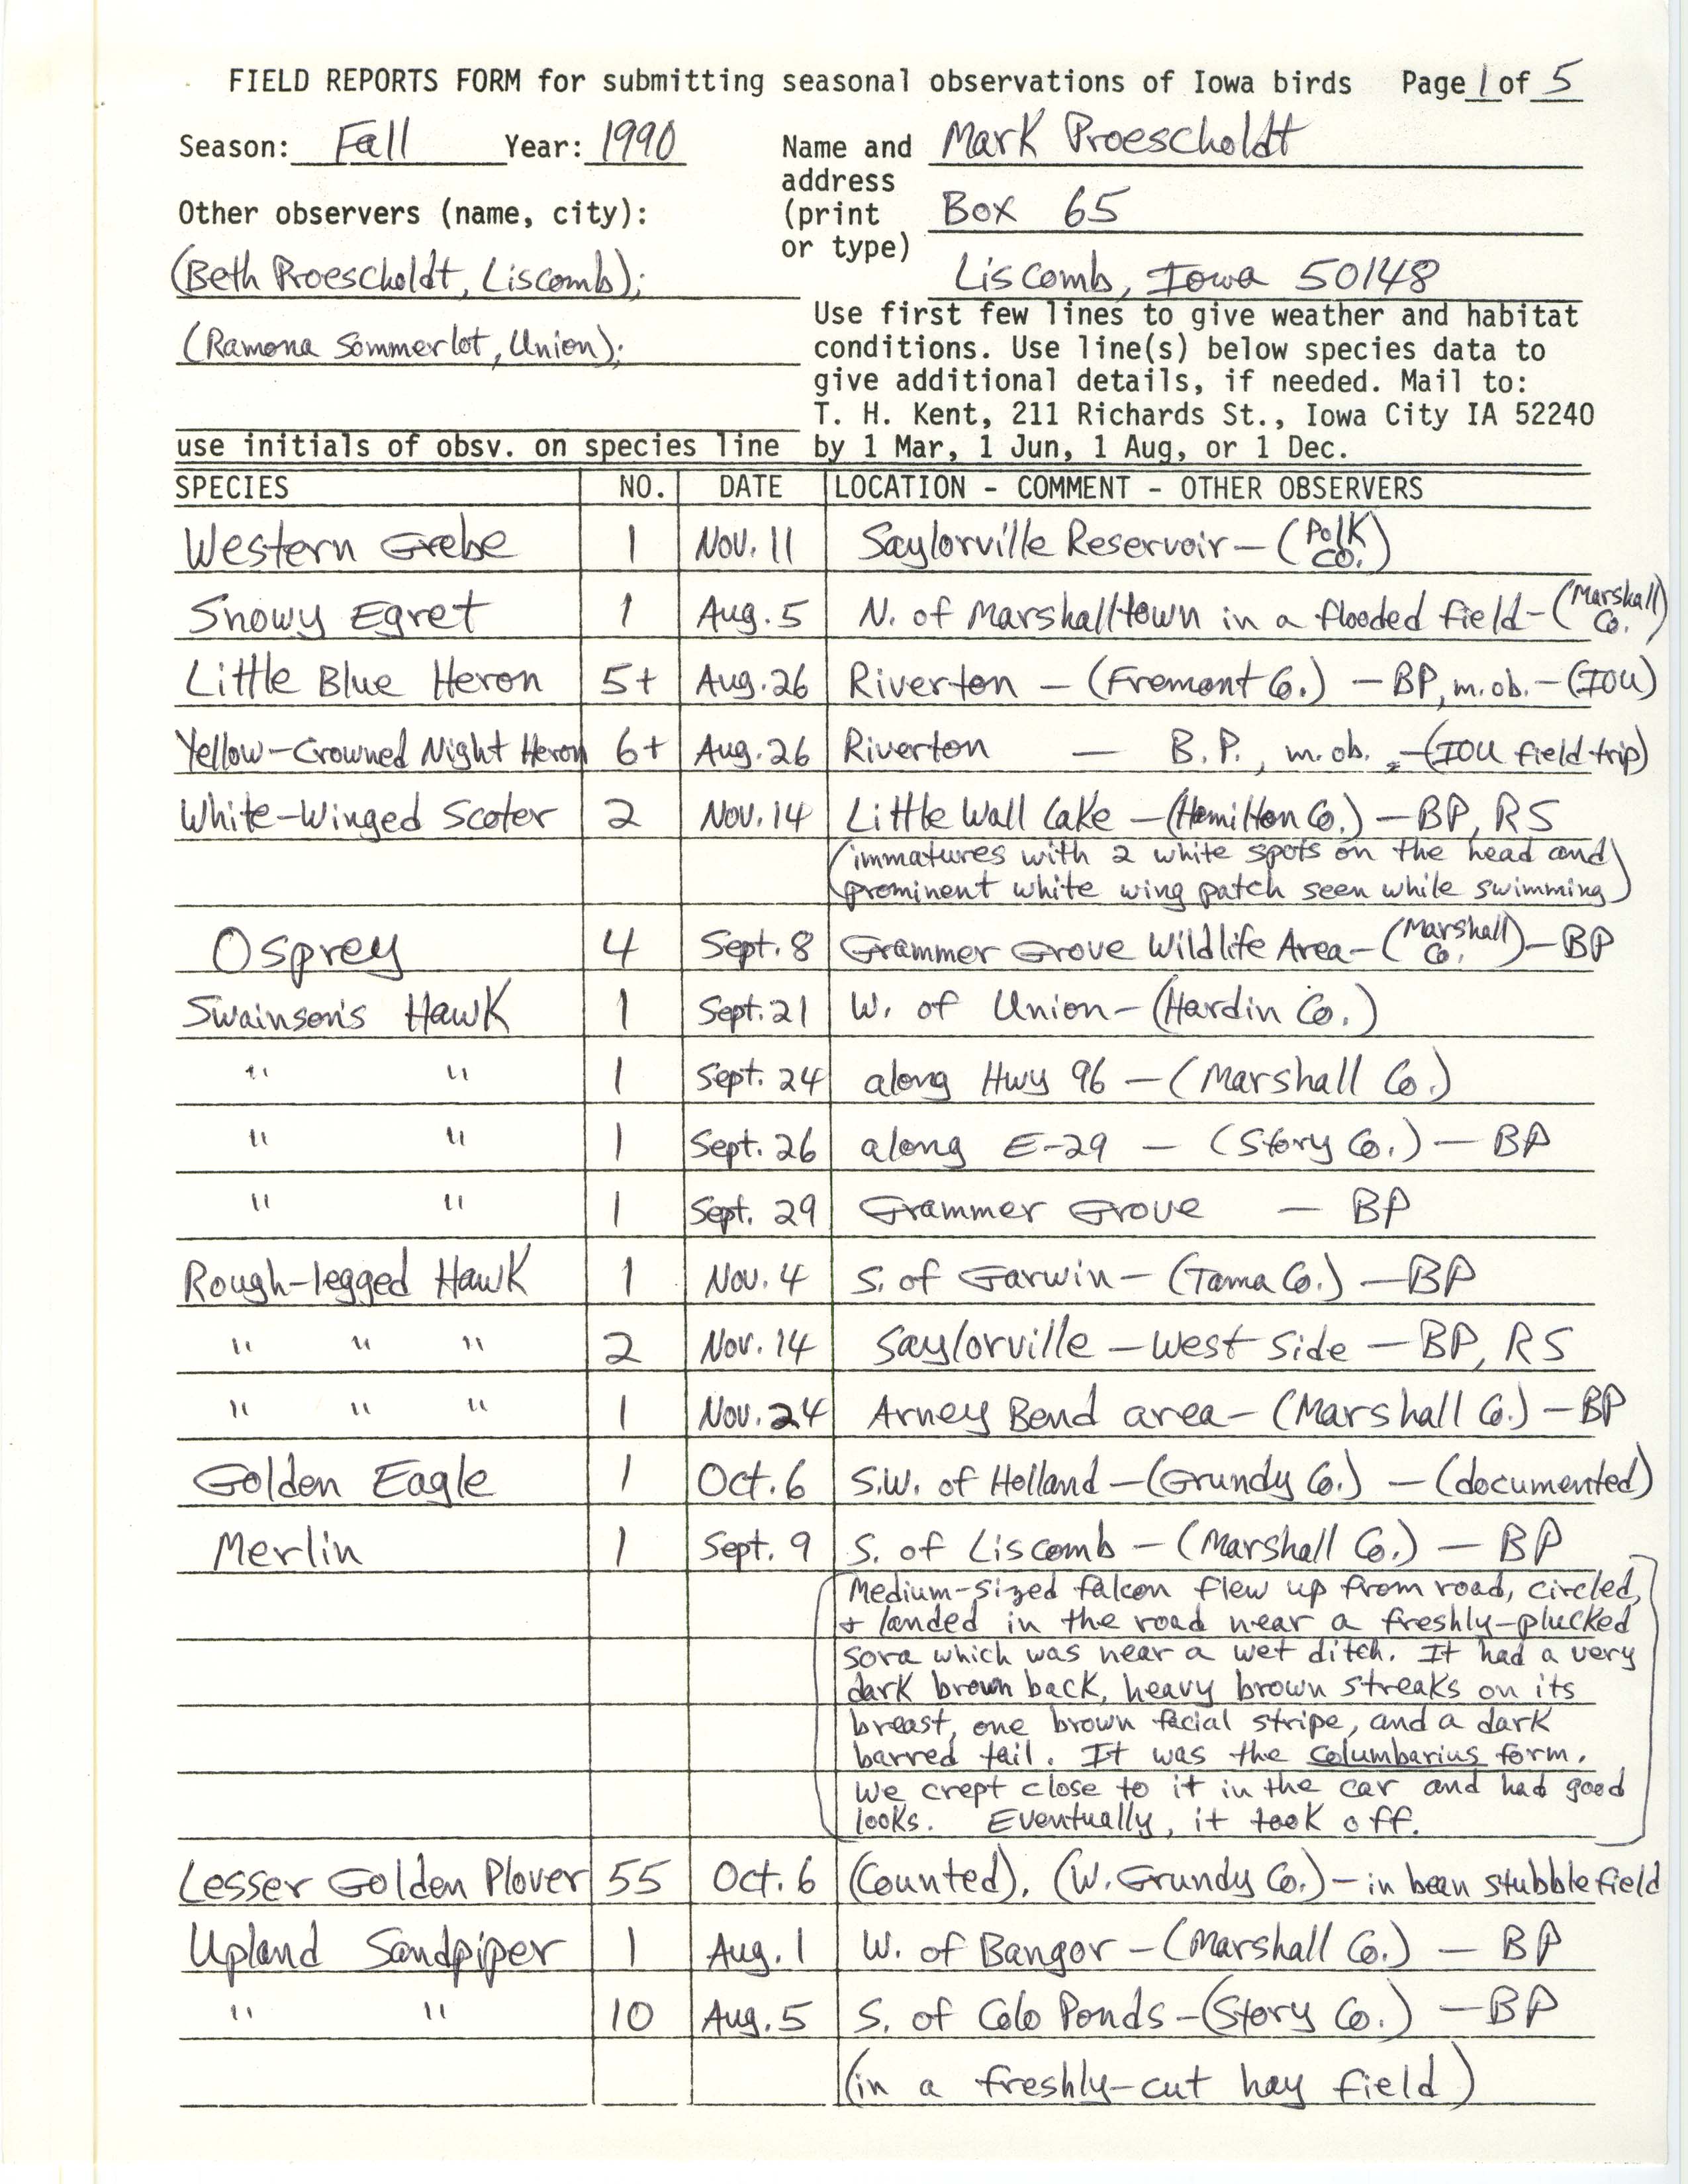 Field reports, Mark Proescholdt, fall 1990